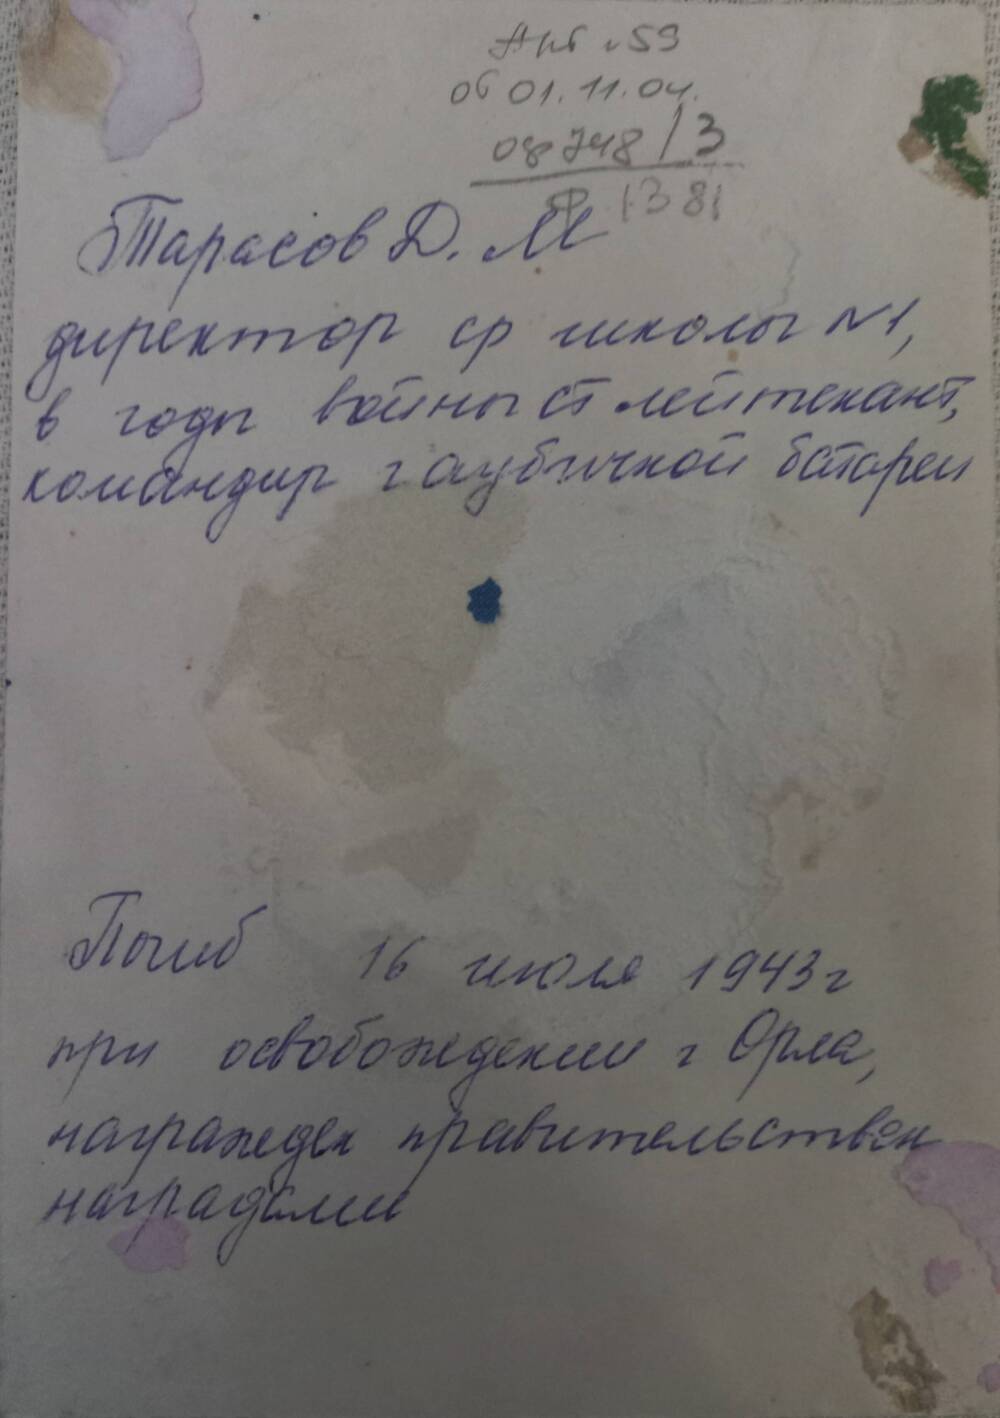 Фото. Тарасов Д.М. - директор средней школы №1, погиб 16.07.1943 г.